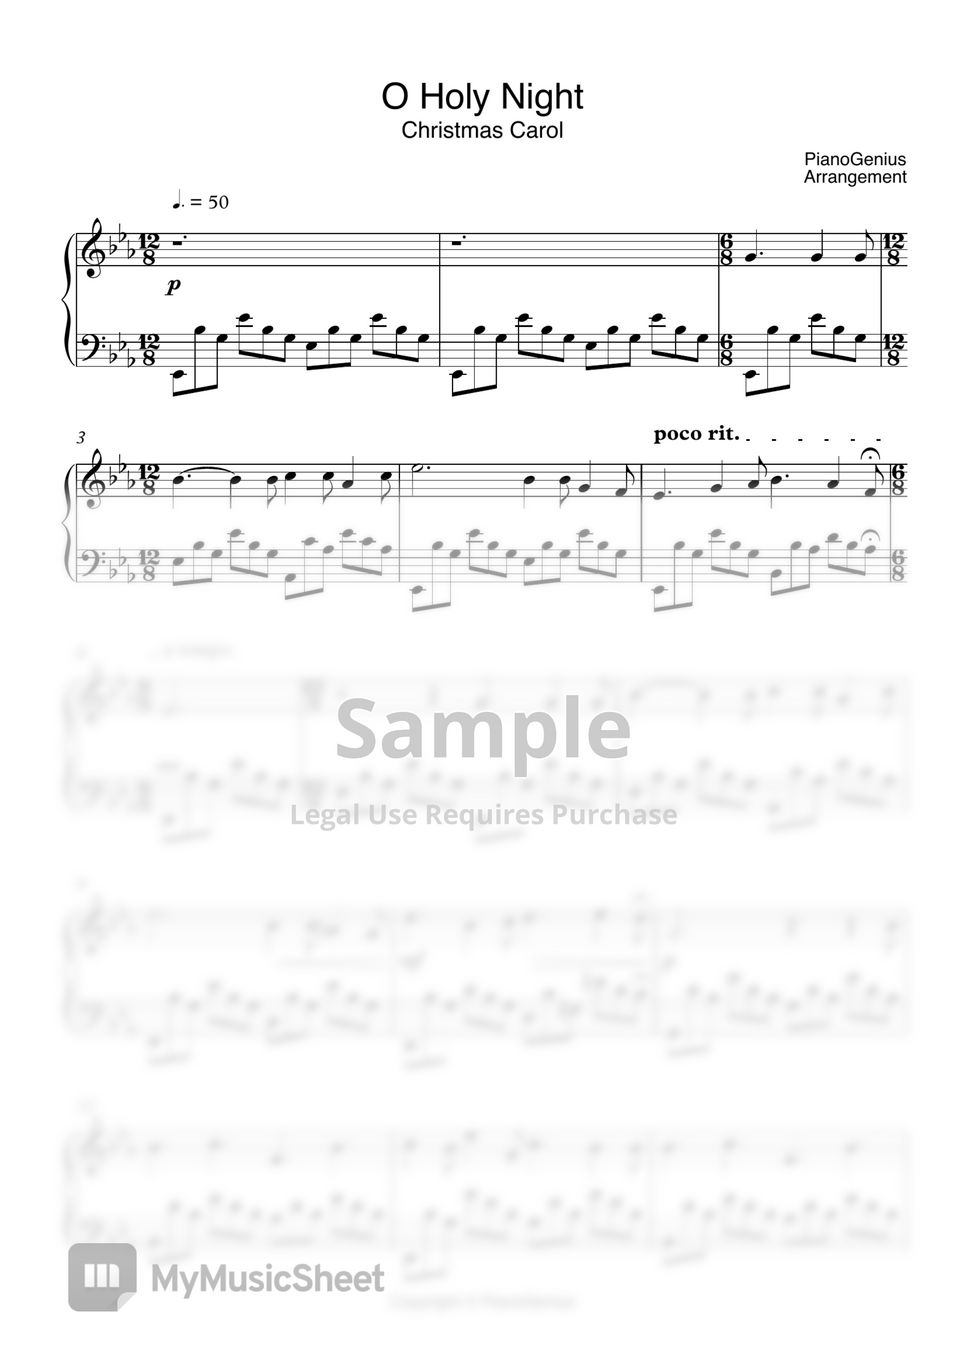 Adolphe Adam - O Holy Night by PianoGenius